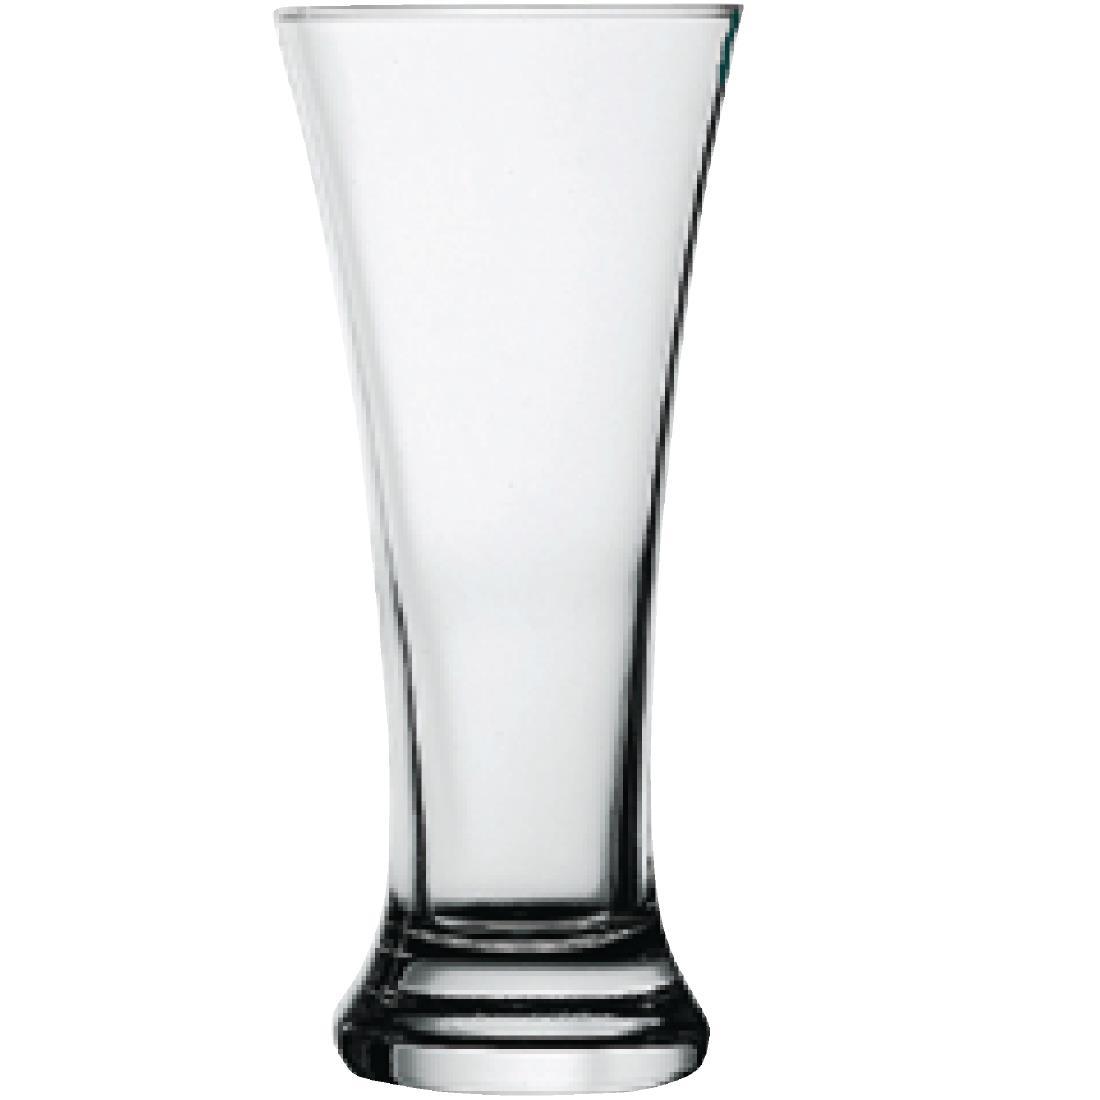 Arcoroc Pilsner Glasses 285ml CE Marked (Pack of 48) - S055  - 1